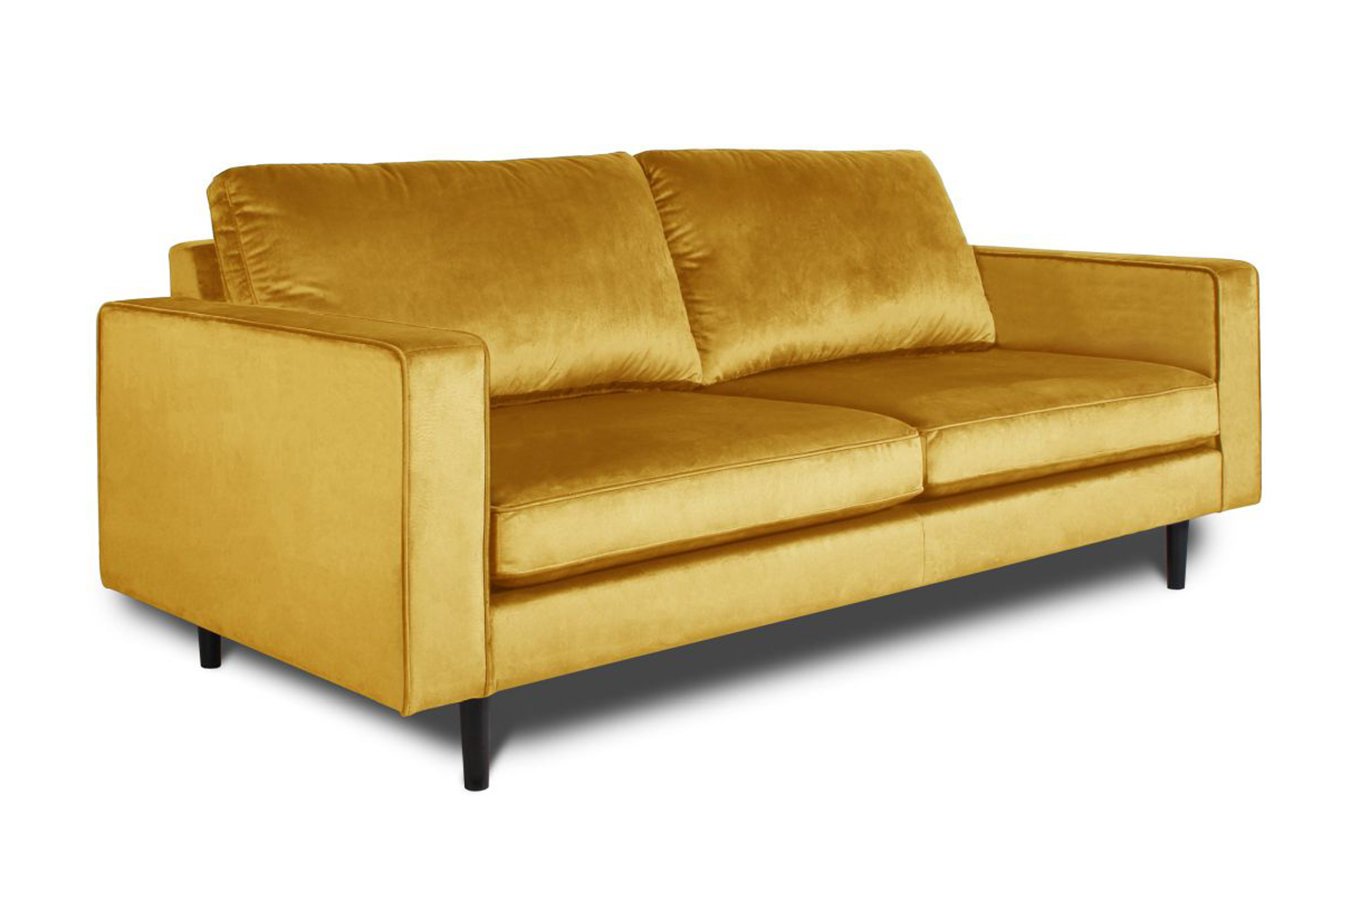 Nowoczesna sofa FRESH / szerokość 200 cm